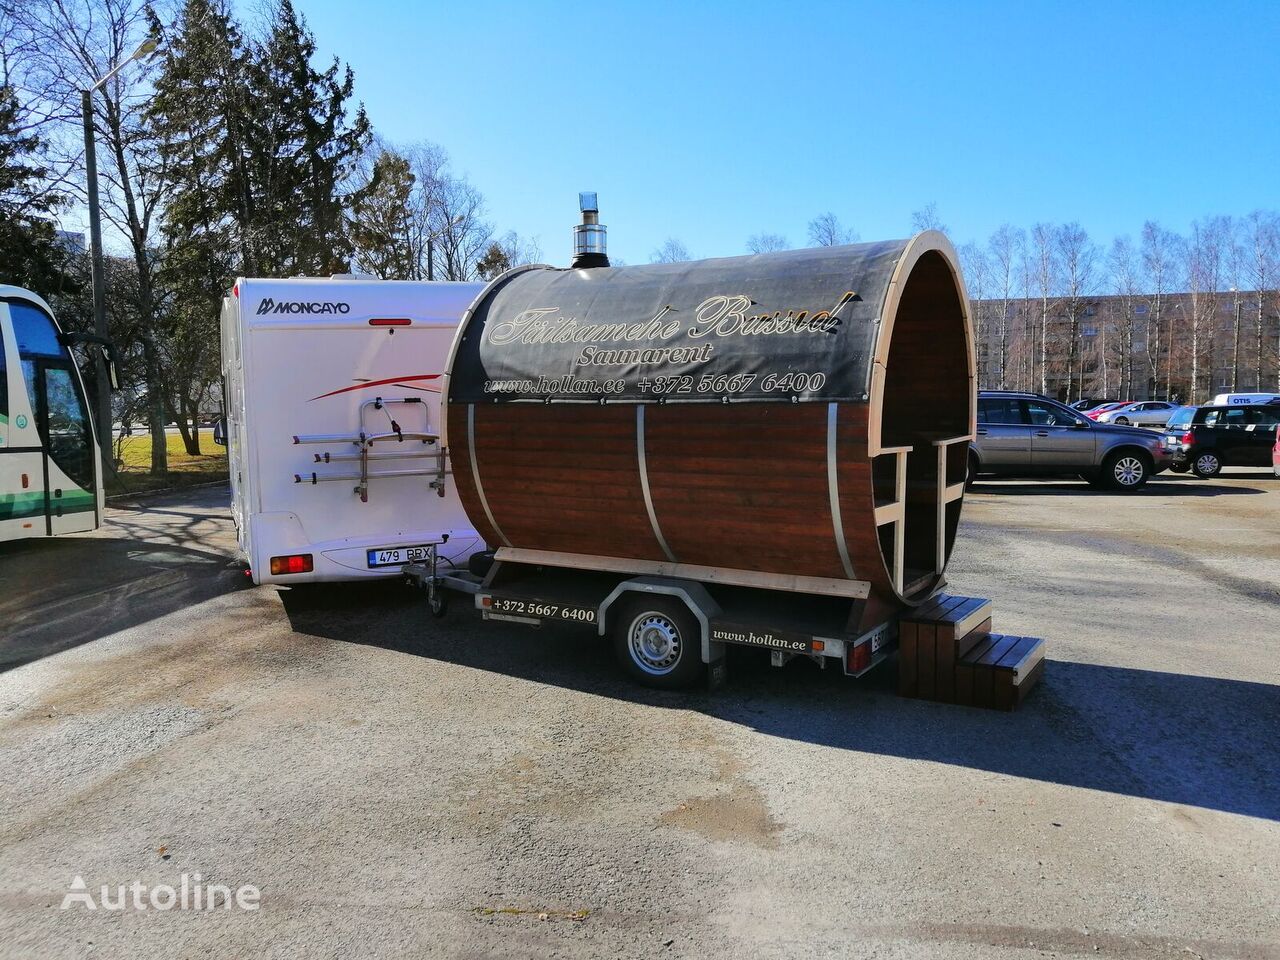 Citroen mobile sauna